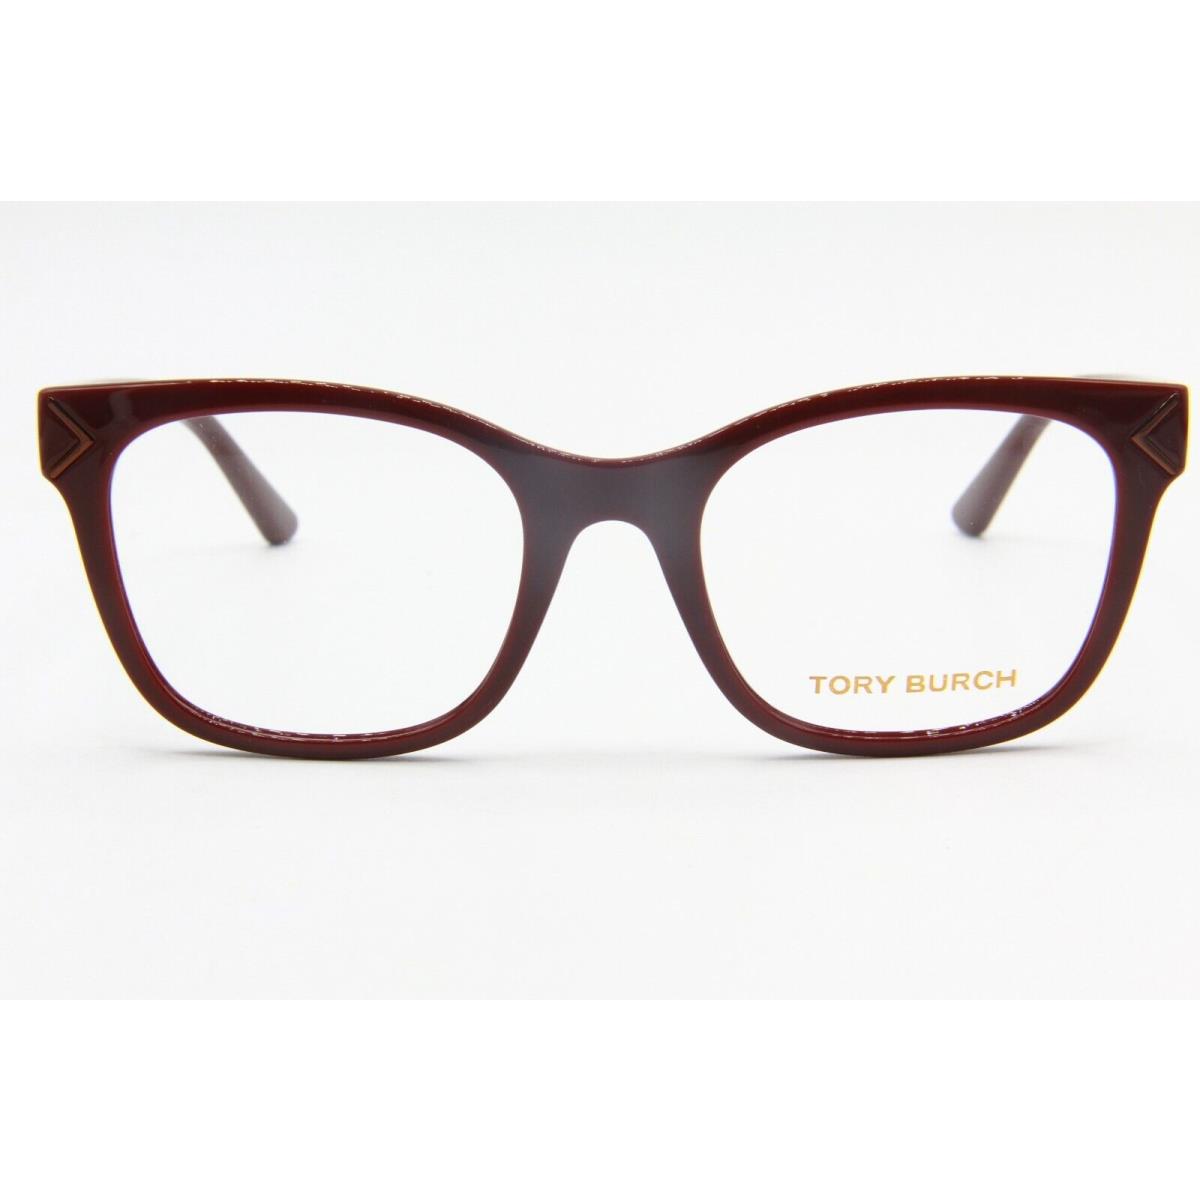 Tory Burch eyeglasses  - Red Frame 0